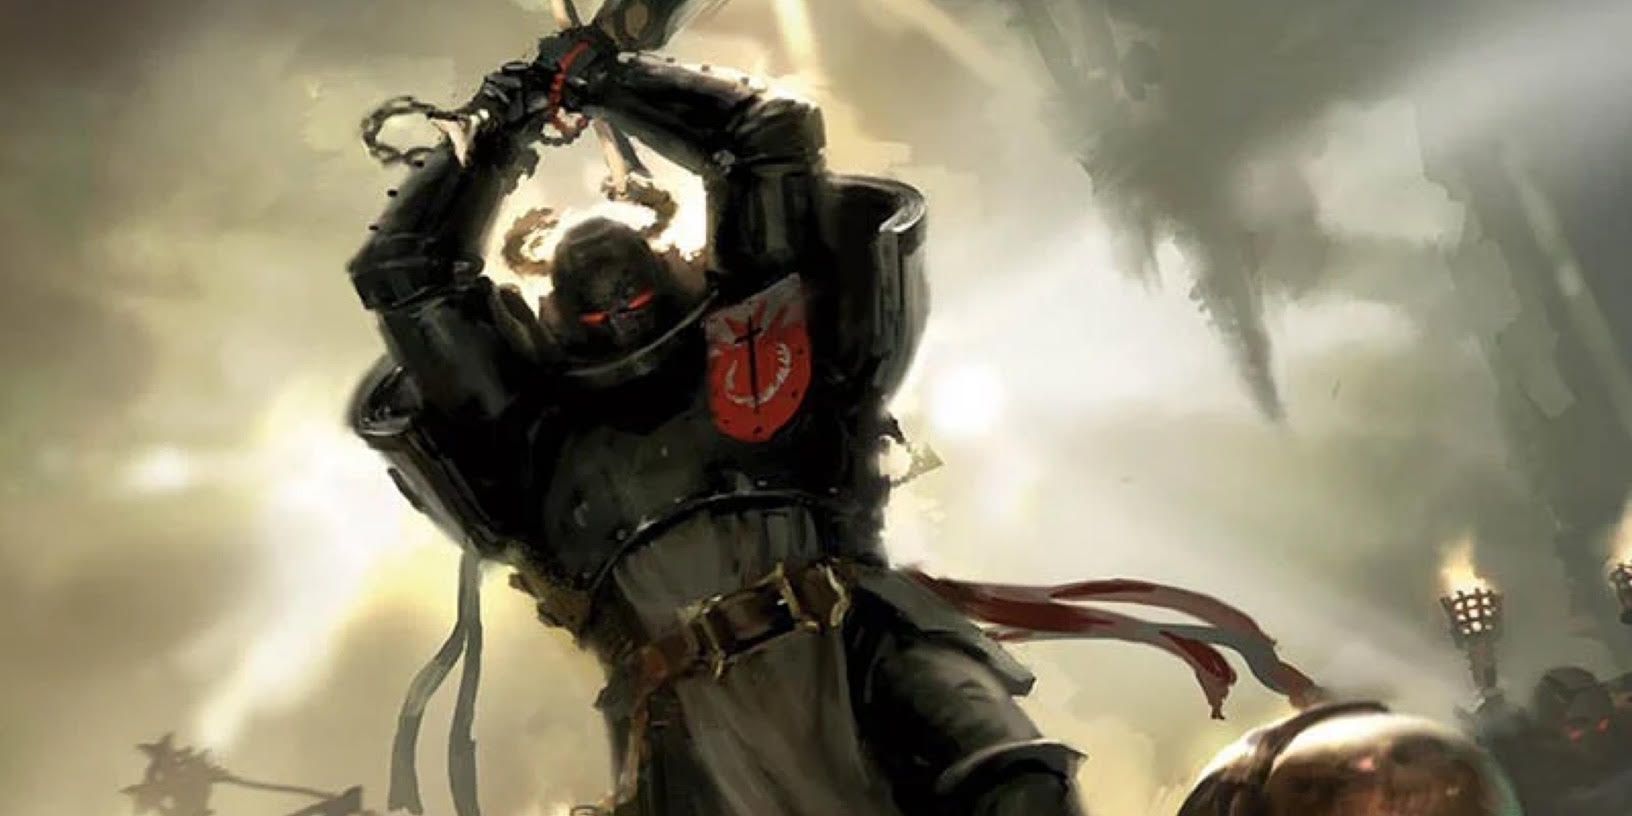 A Black Templar raises his sword in the air with a breaking sun behind him